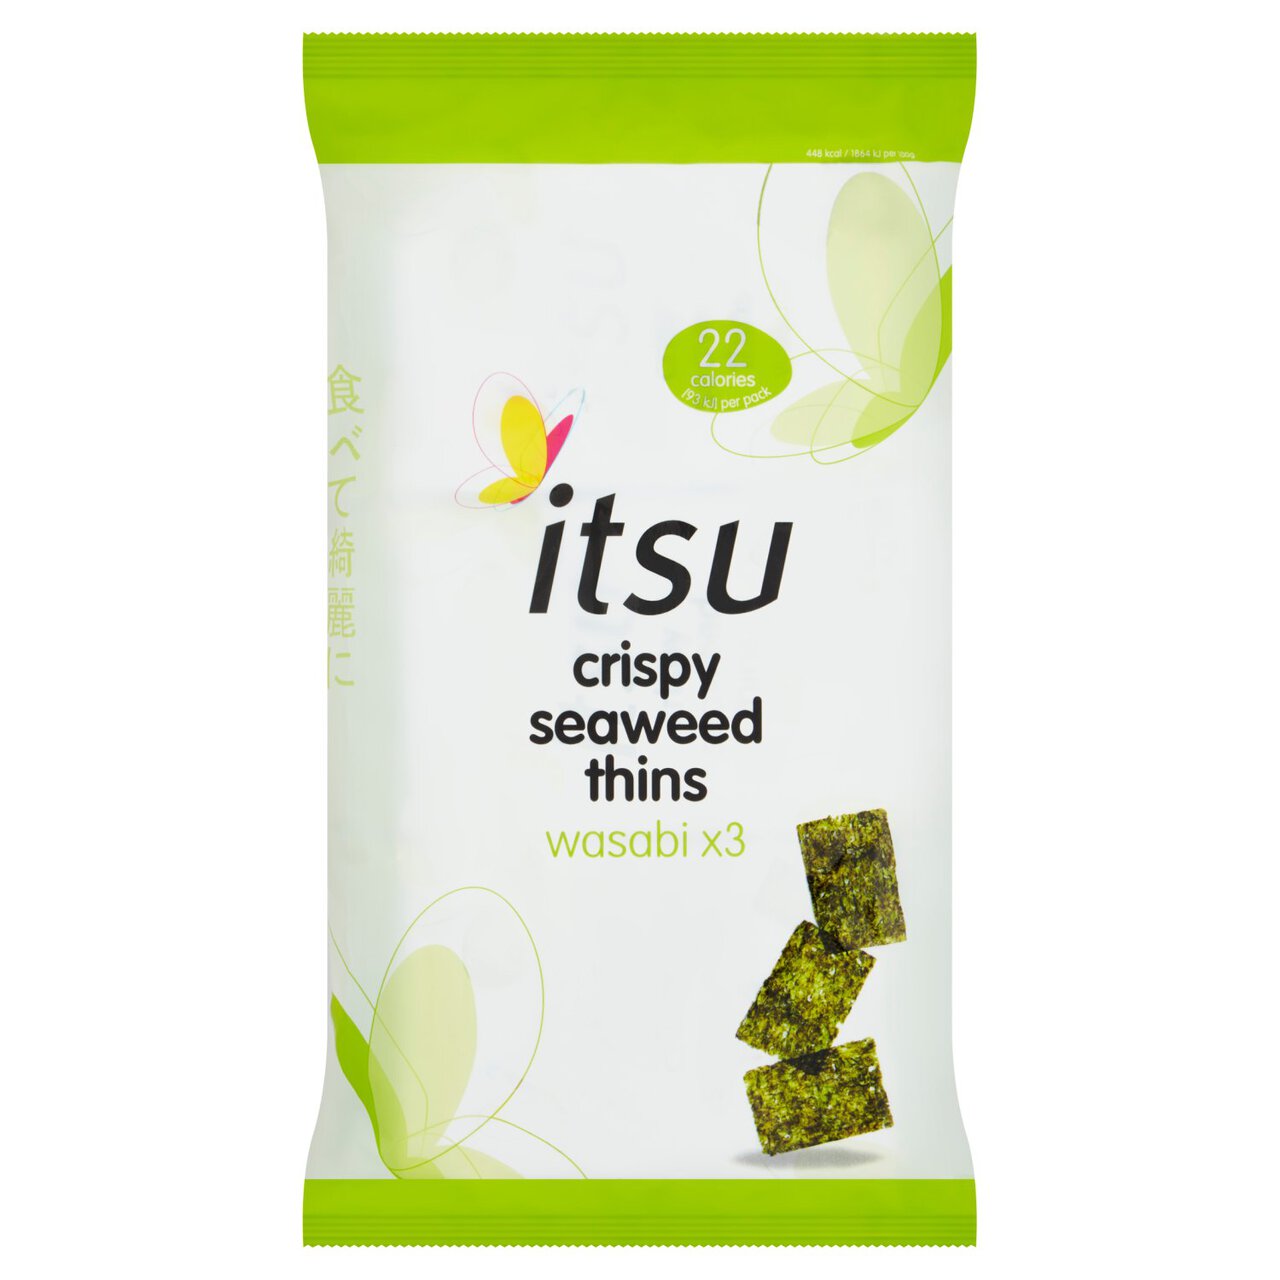 Itsu wasabi crispy seaweed thins multipack 3 per pack